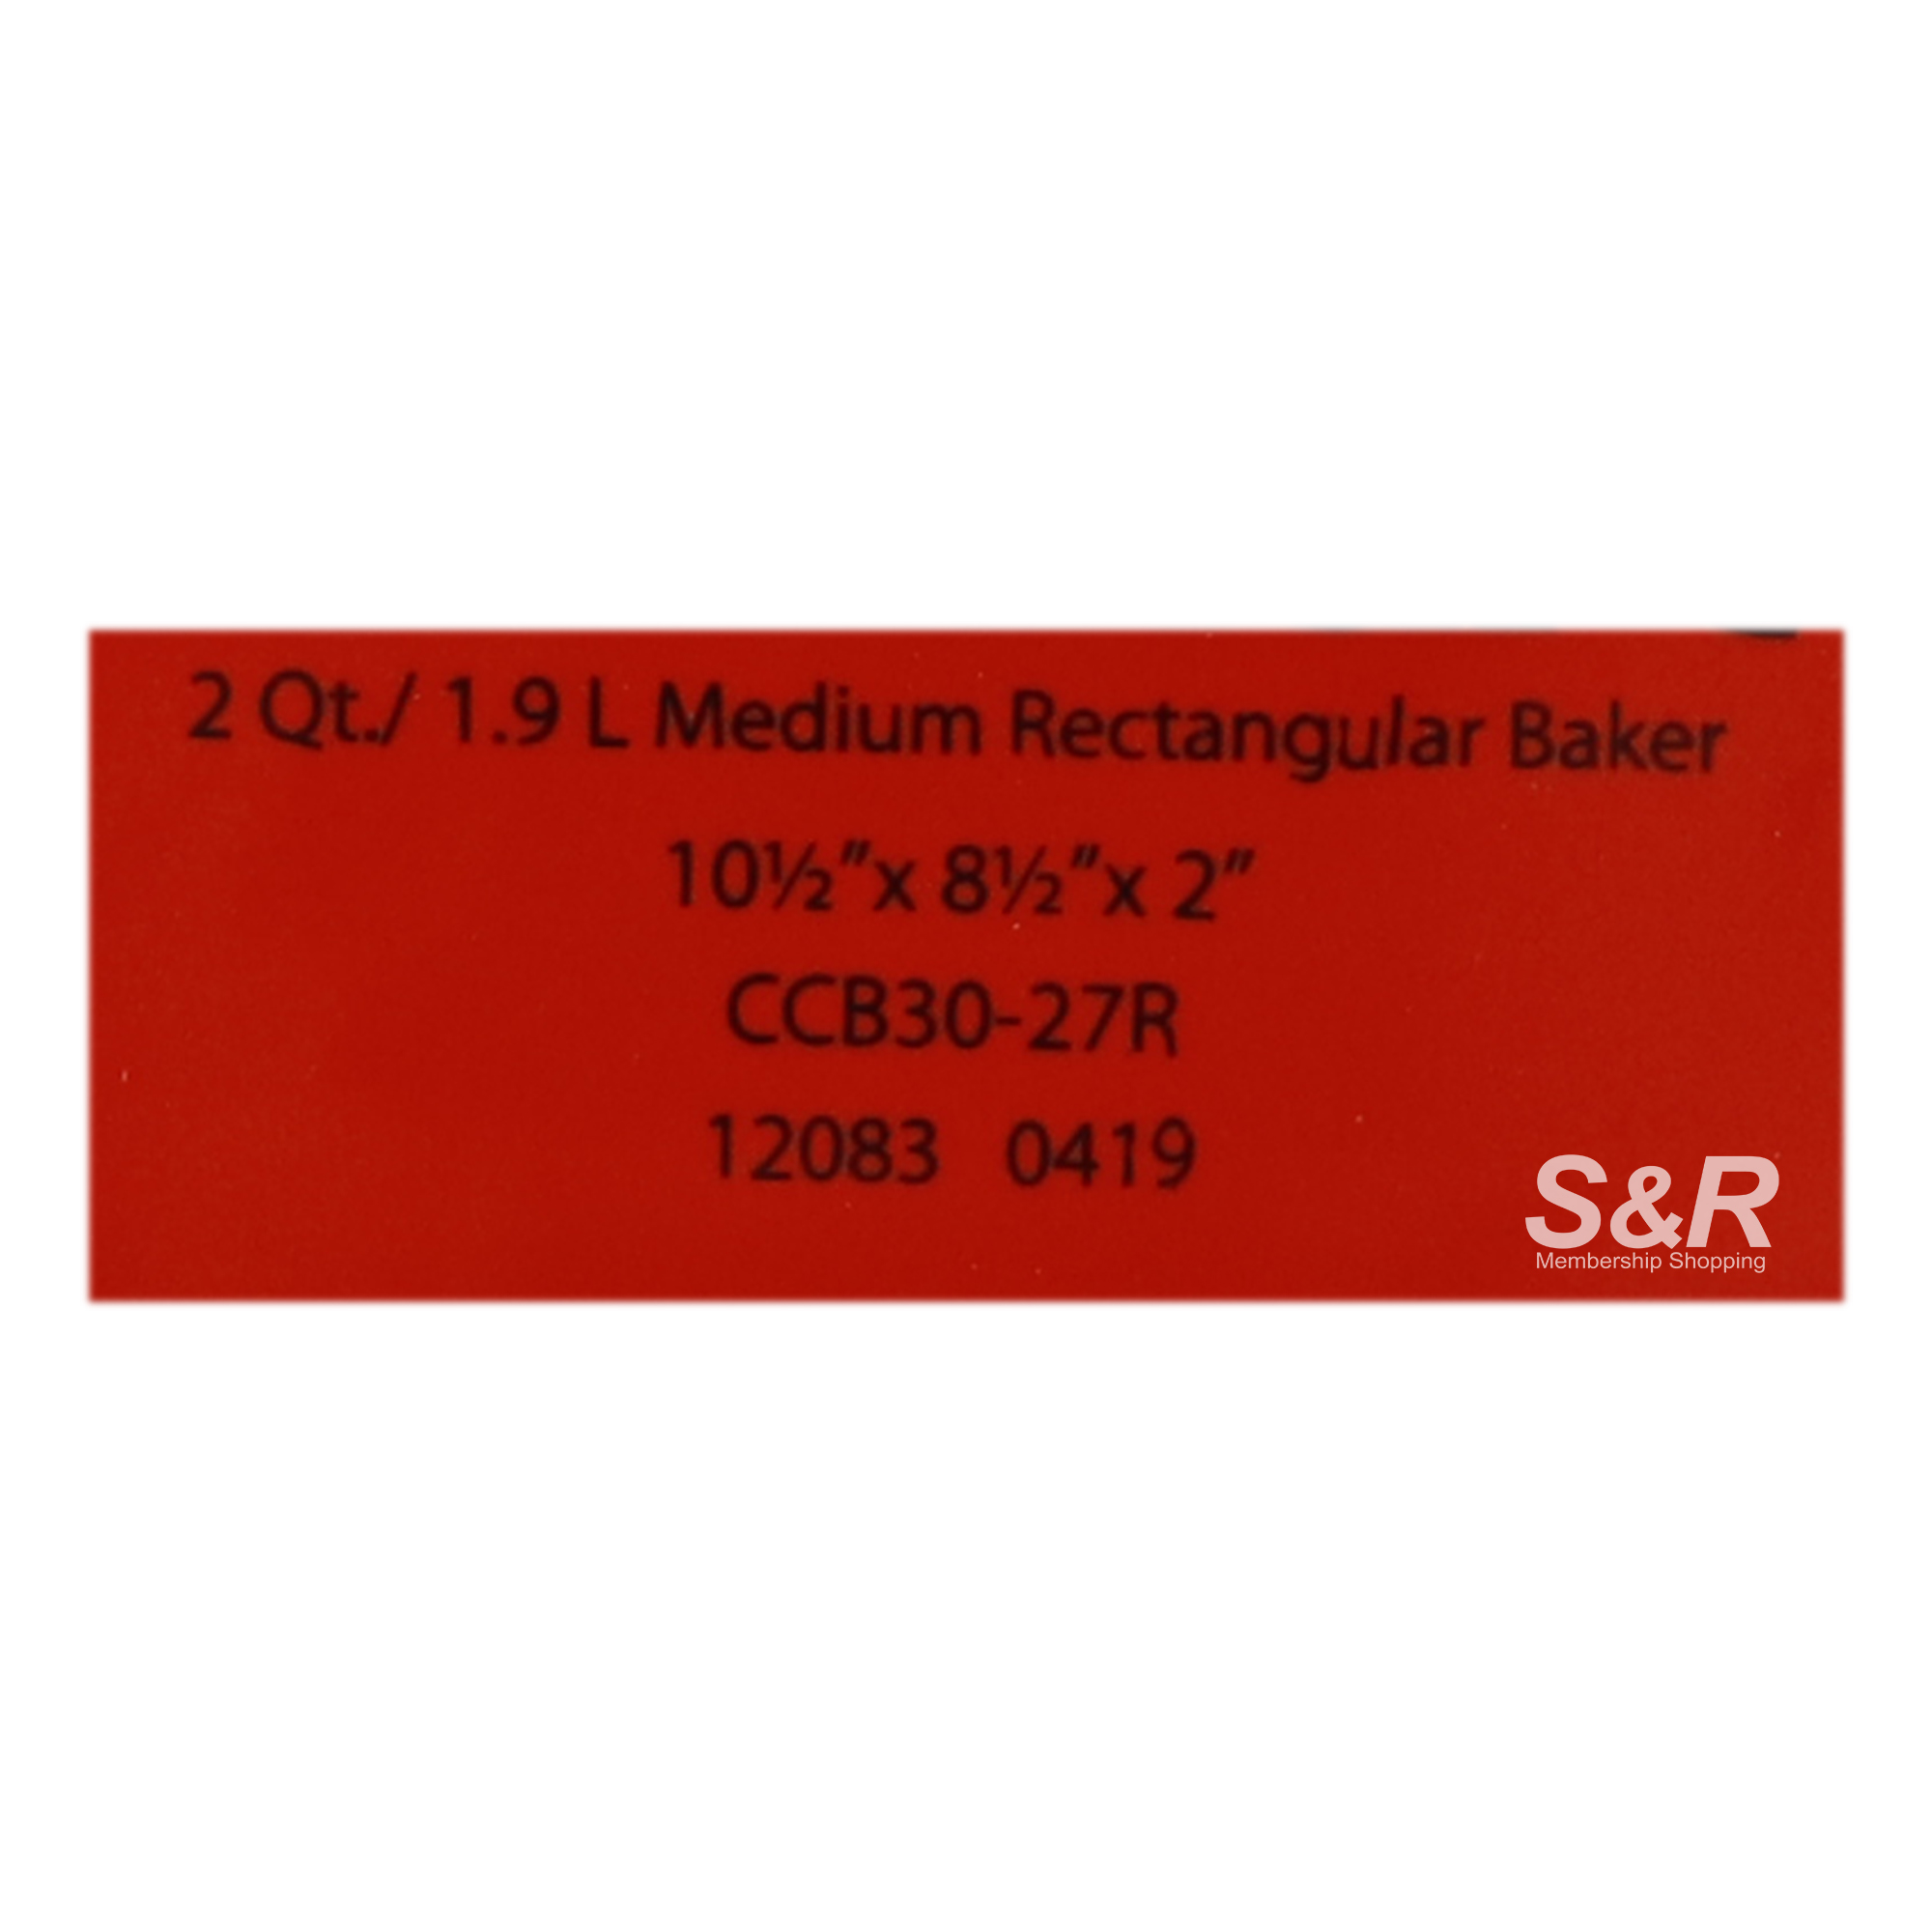 Cuisinart 2-Quart Medium Rectangular Baker, Red CCB30-27R